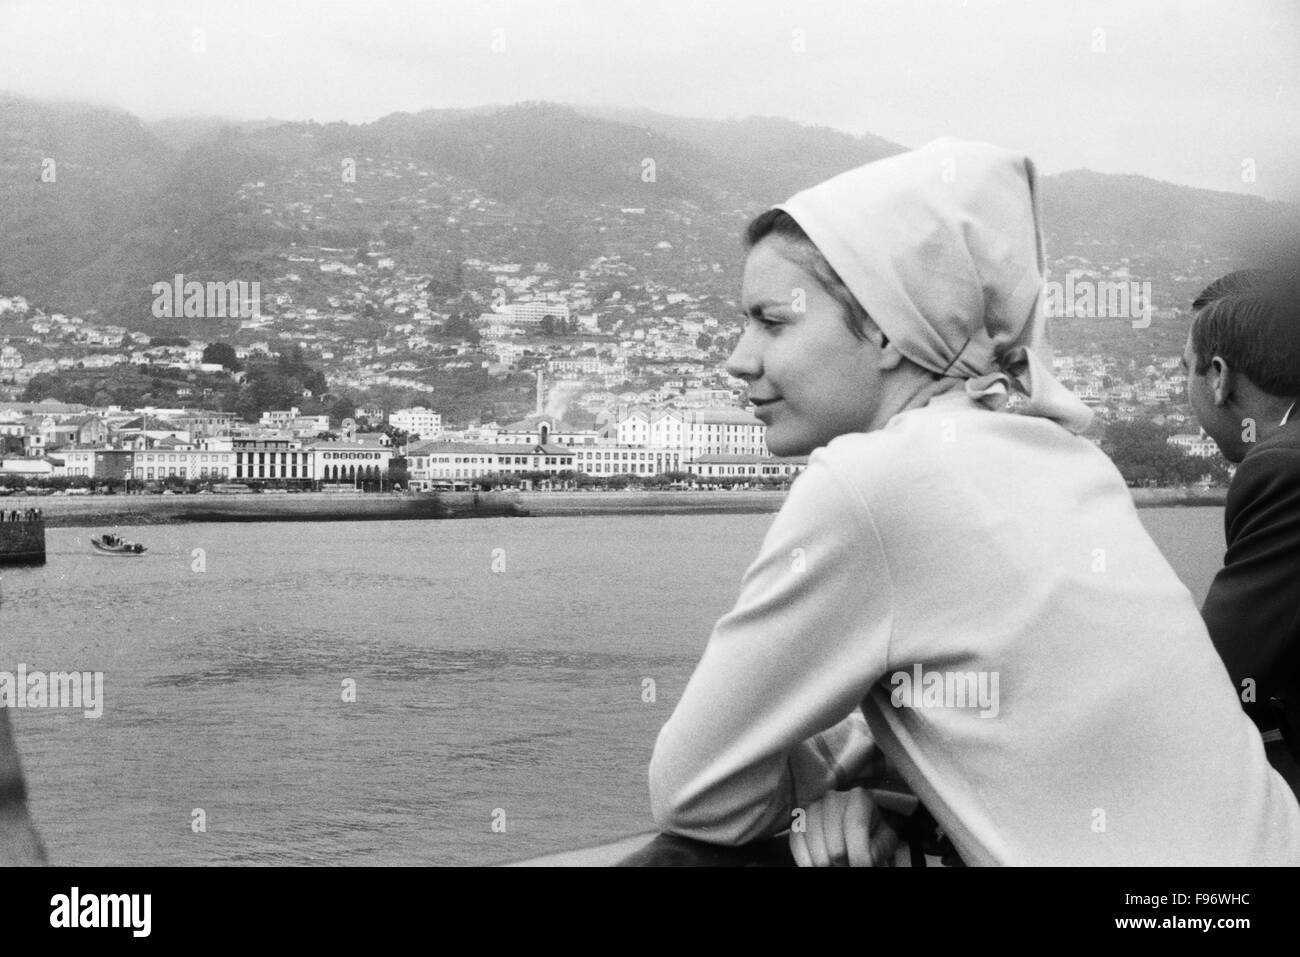 Partie auf einer Seereise nach Marokko, 1960er Jahre. À bord d'un croiseur avec direction Maroc, 1960. Banque D'Images